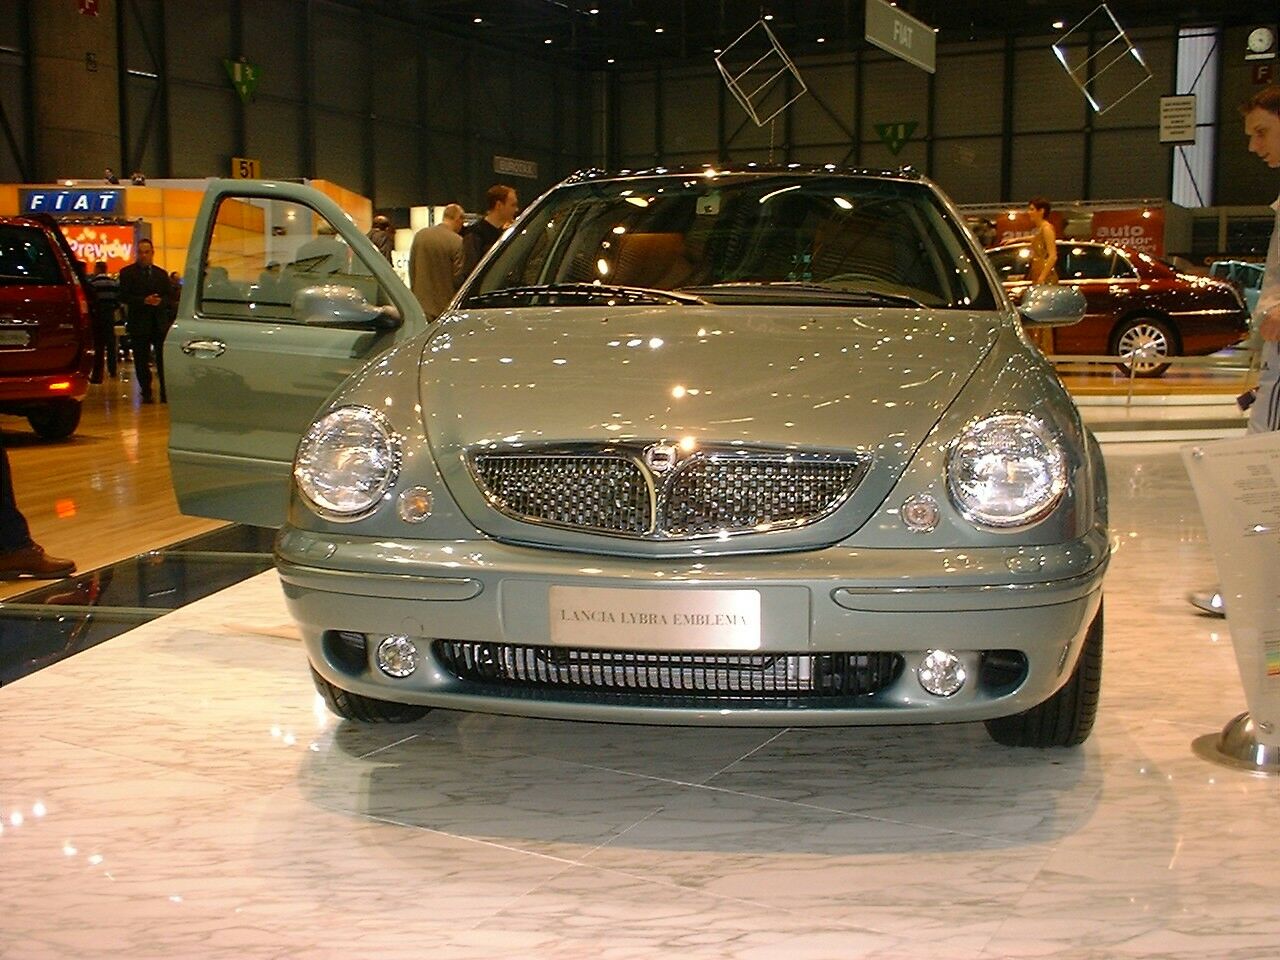 Lancia Lybra 2.4 JTD Emblema Stationwagon at the 2003 Geneva Motor Show